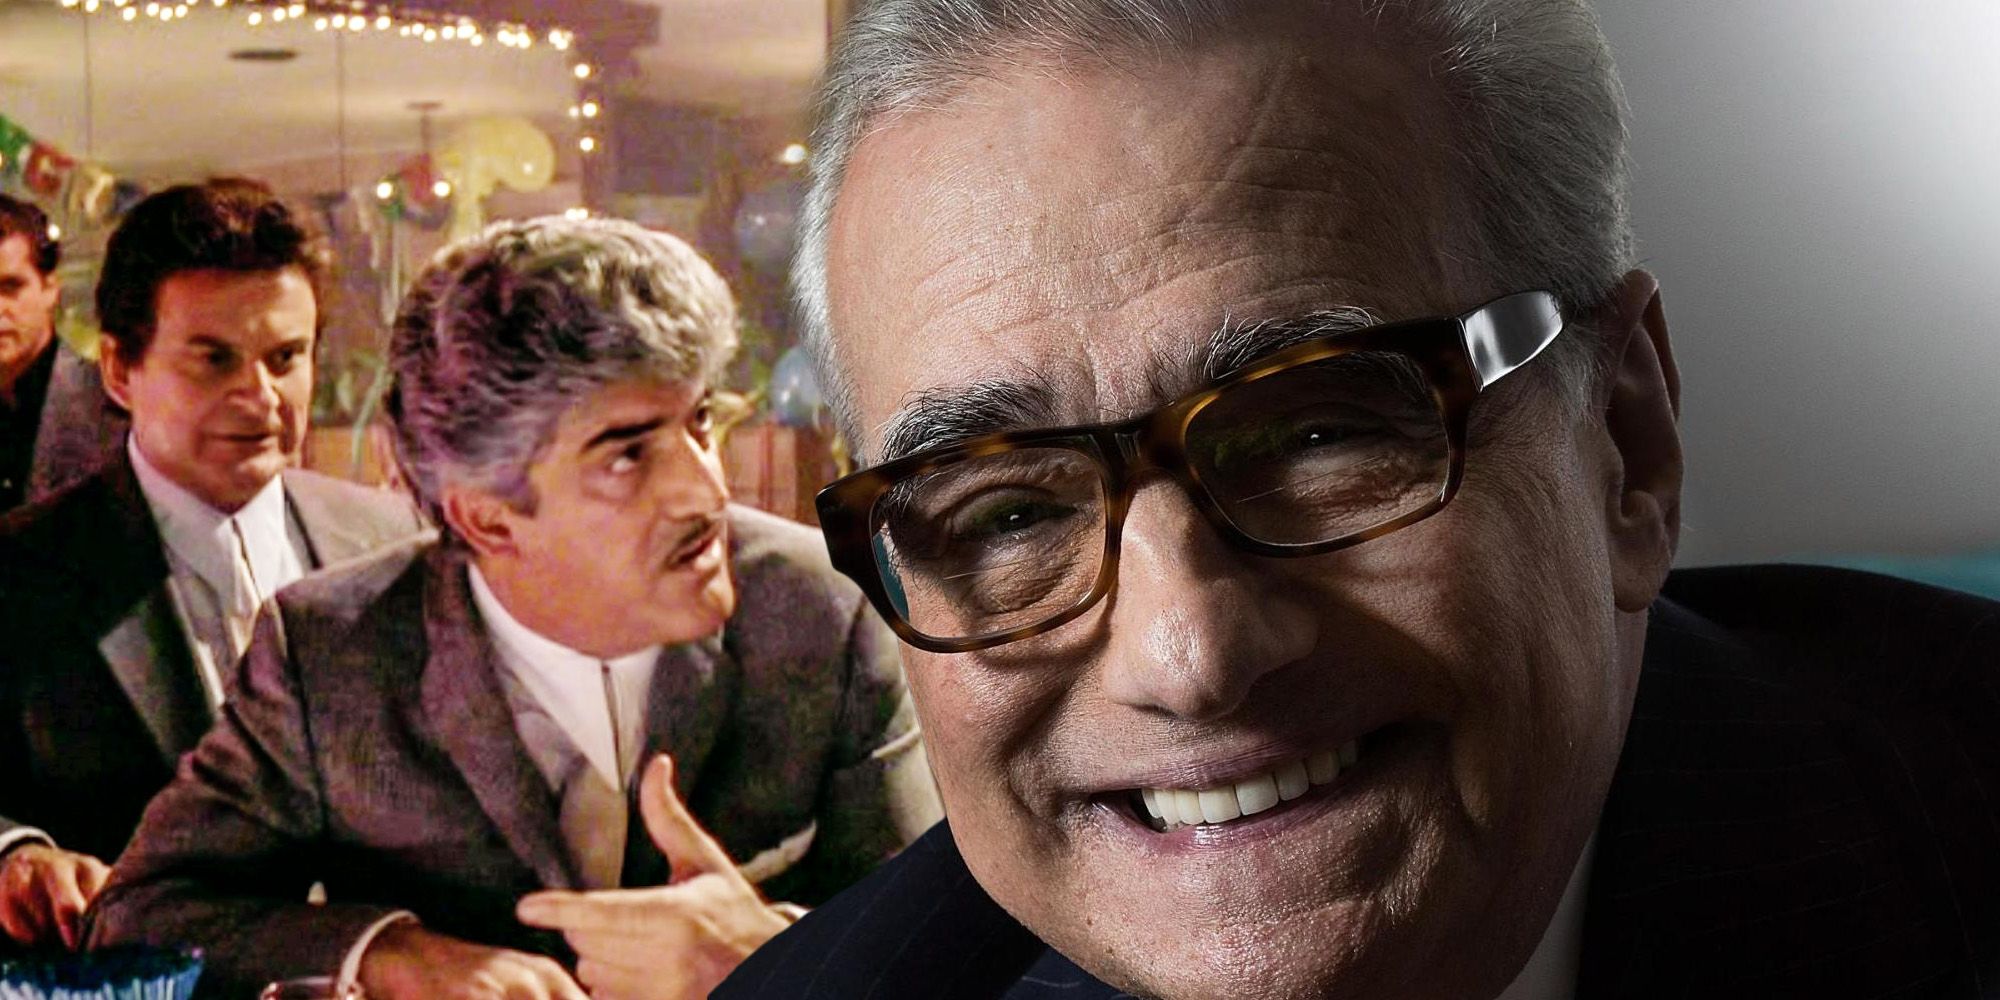 Scorsese Goodfellas Billy batts